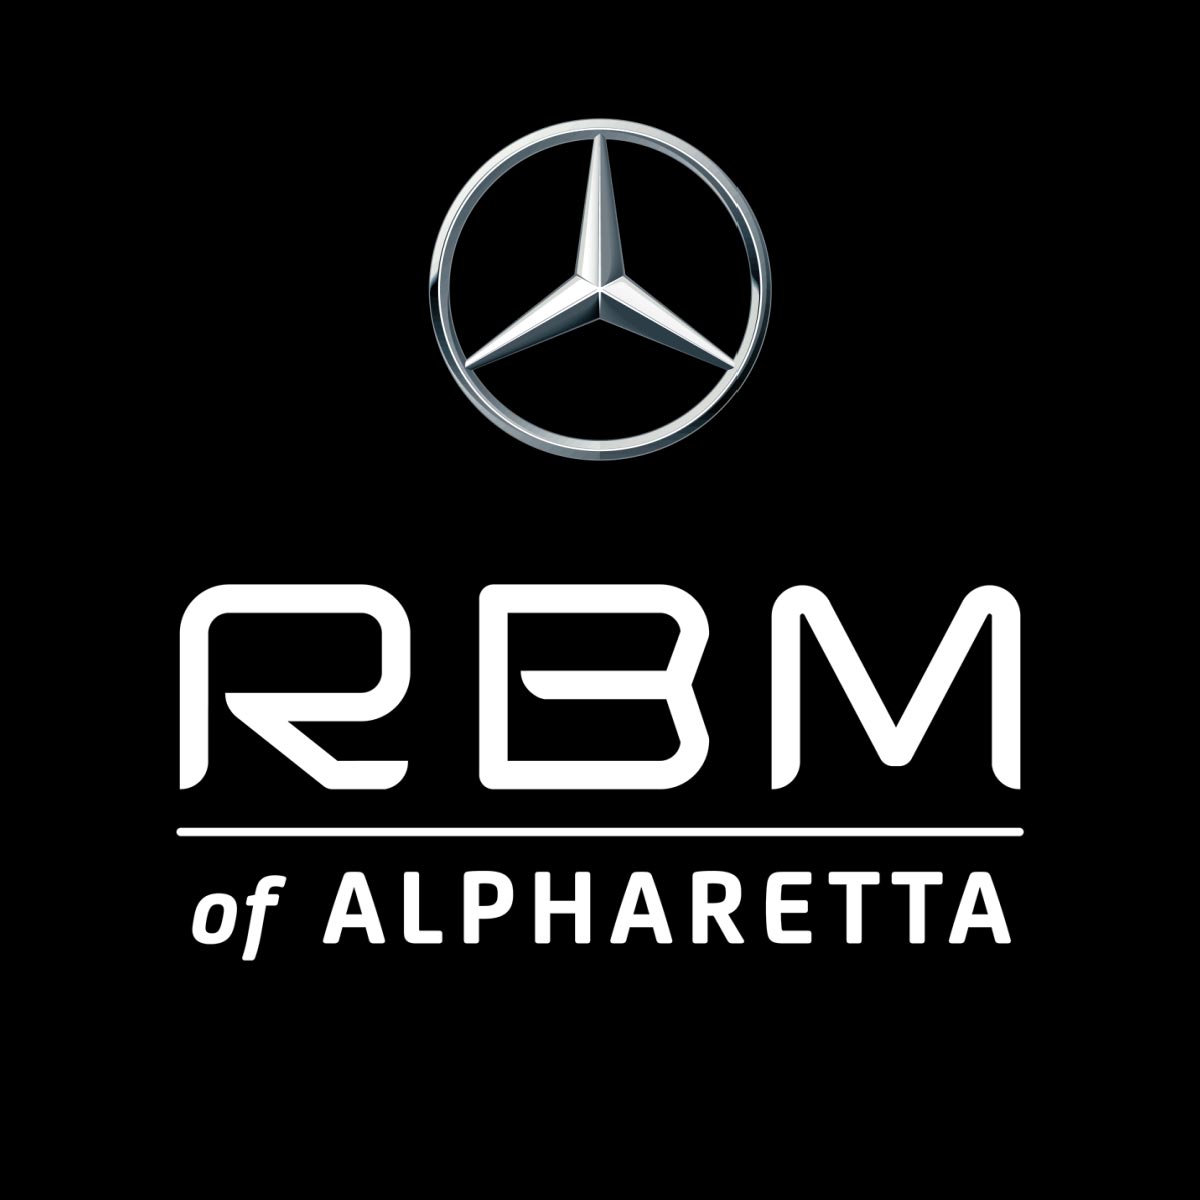 RBM of Alpharetta